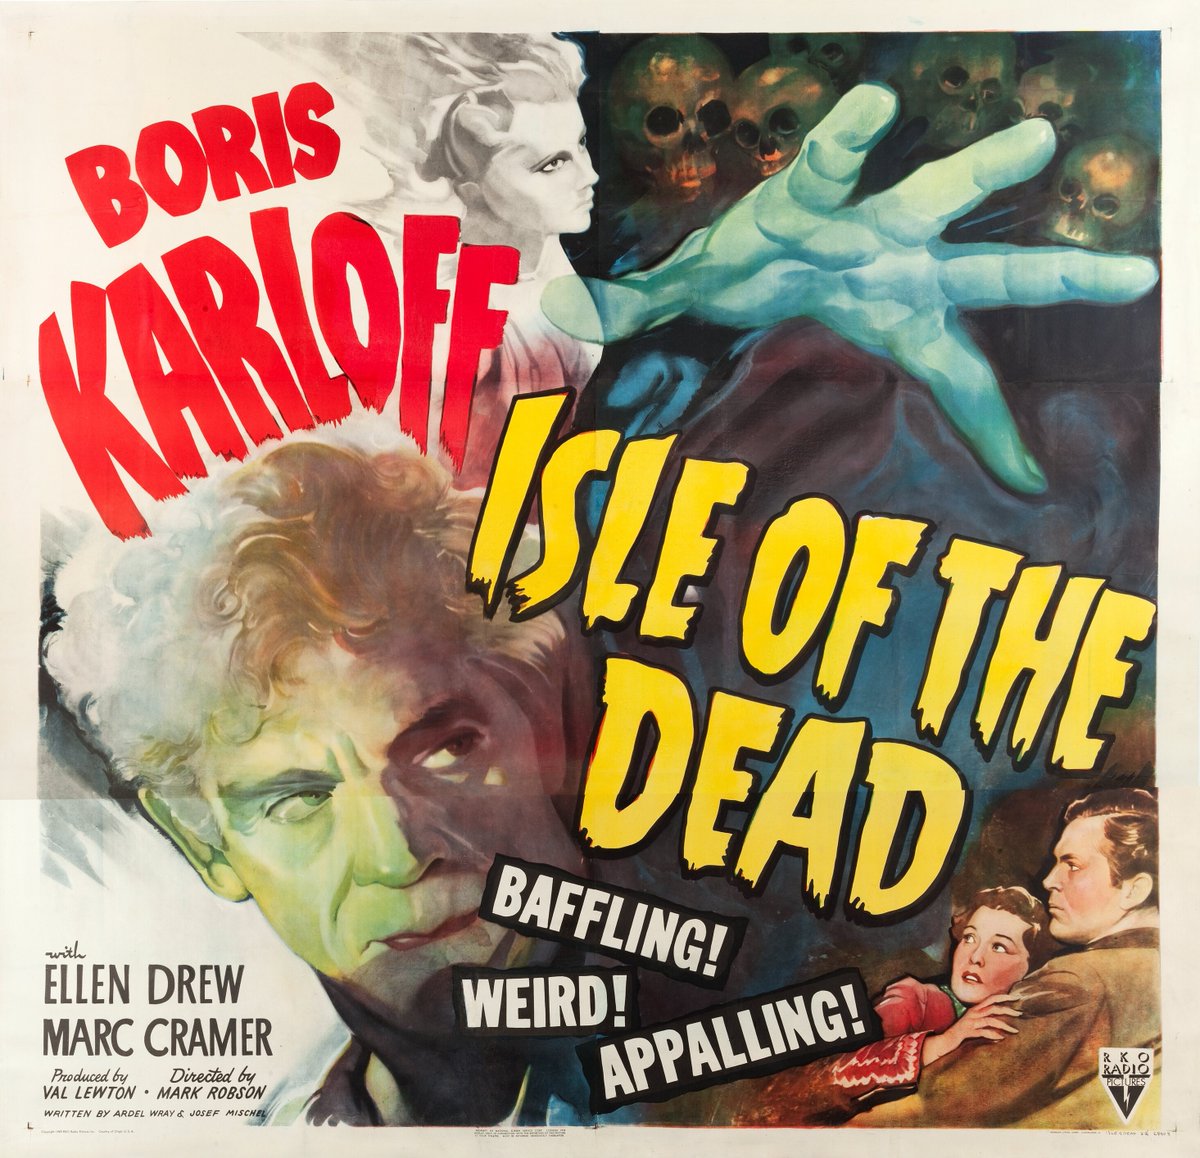 Isle of the Dead (RKO, 1945)
Six Sheet (81' X 81')
.
#TerrorByNight #IsleOfTheDead #BorisKarloff #ValLewton #ClassicHorror #VintageHorror #HorrorMovies #MonsterKid
.